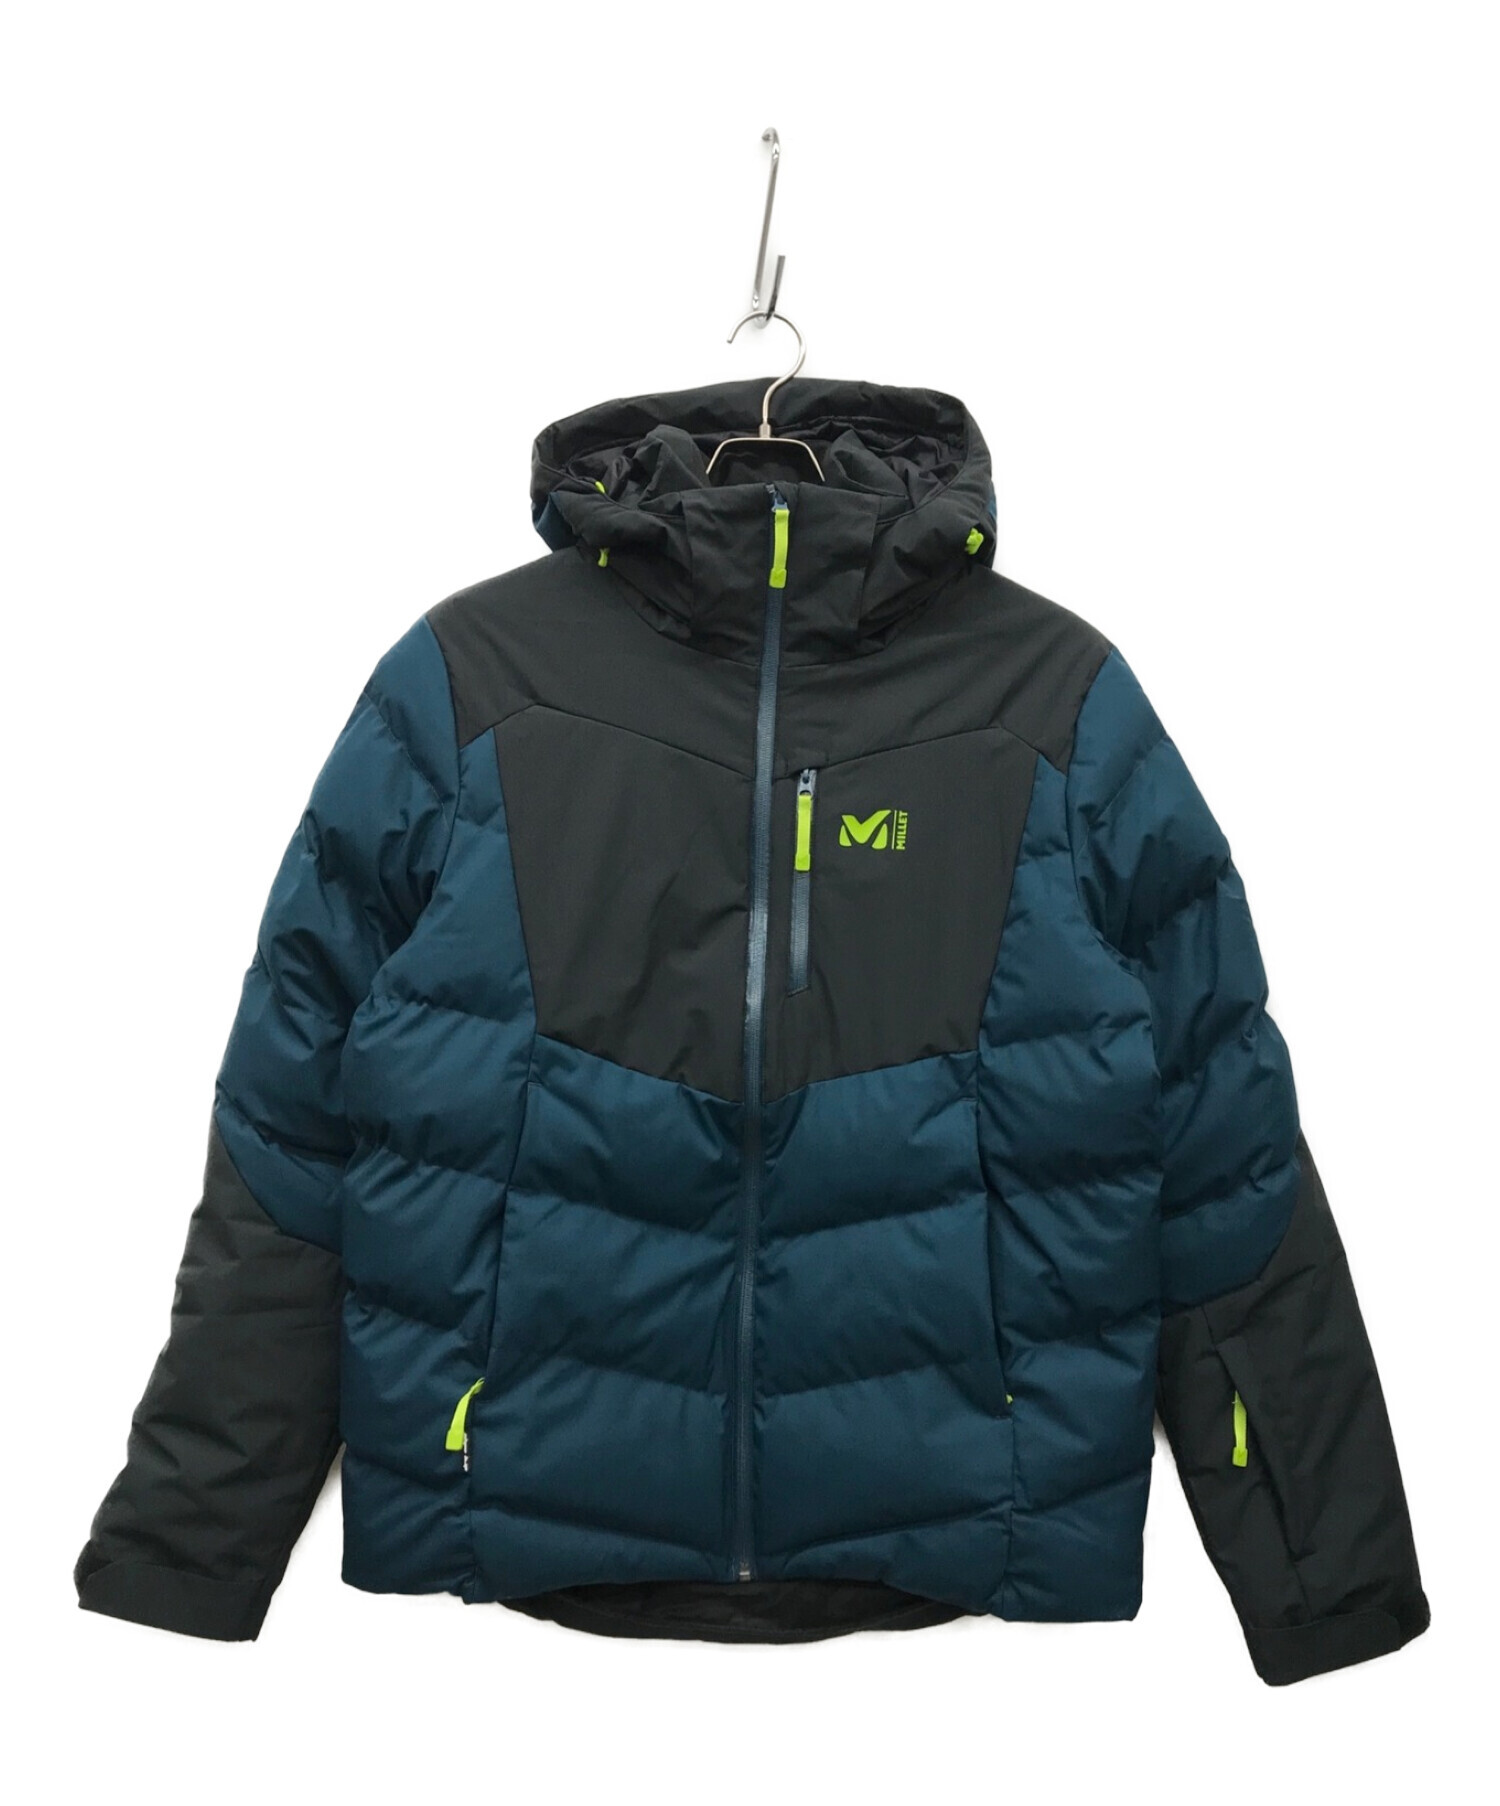 MILLET (ミレー) 中綿スキーウェアジャケット ブラック×ネイビー サイズ:L